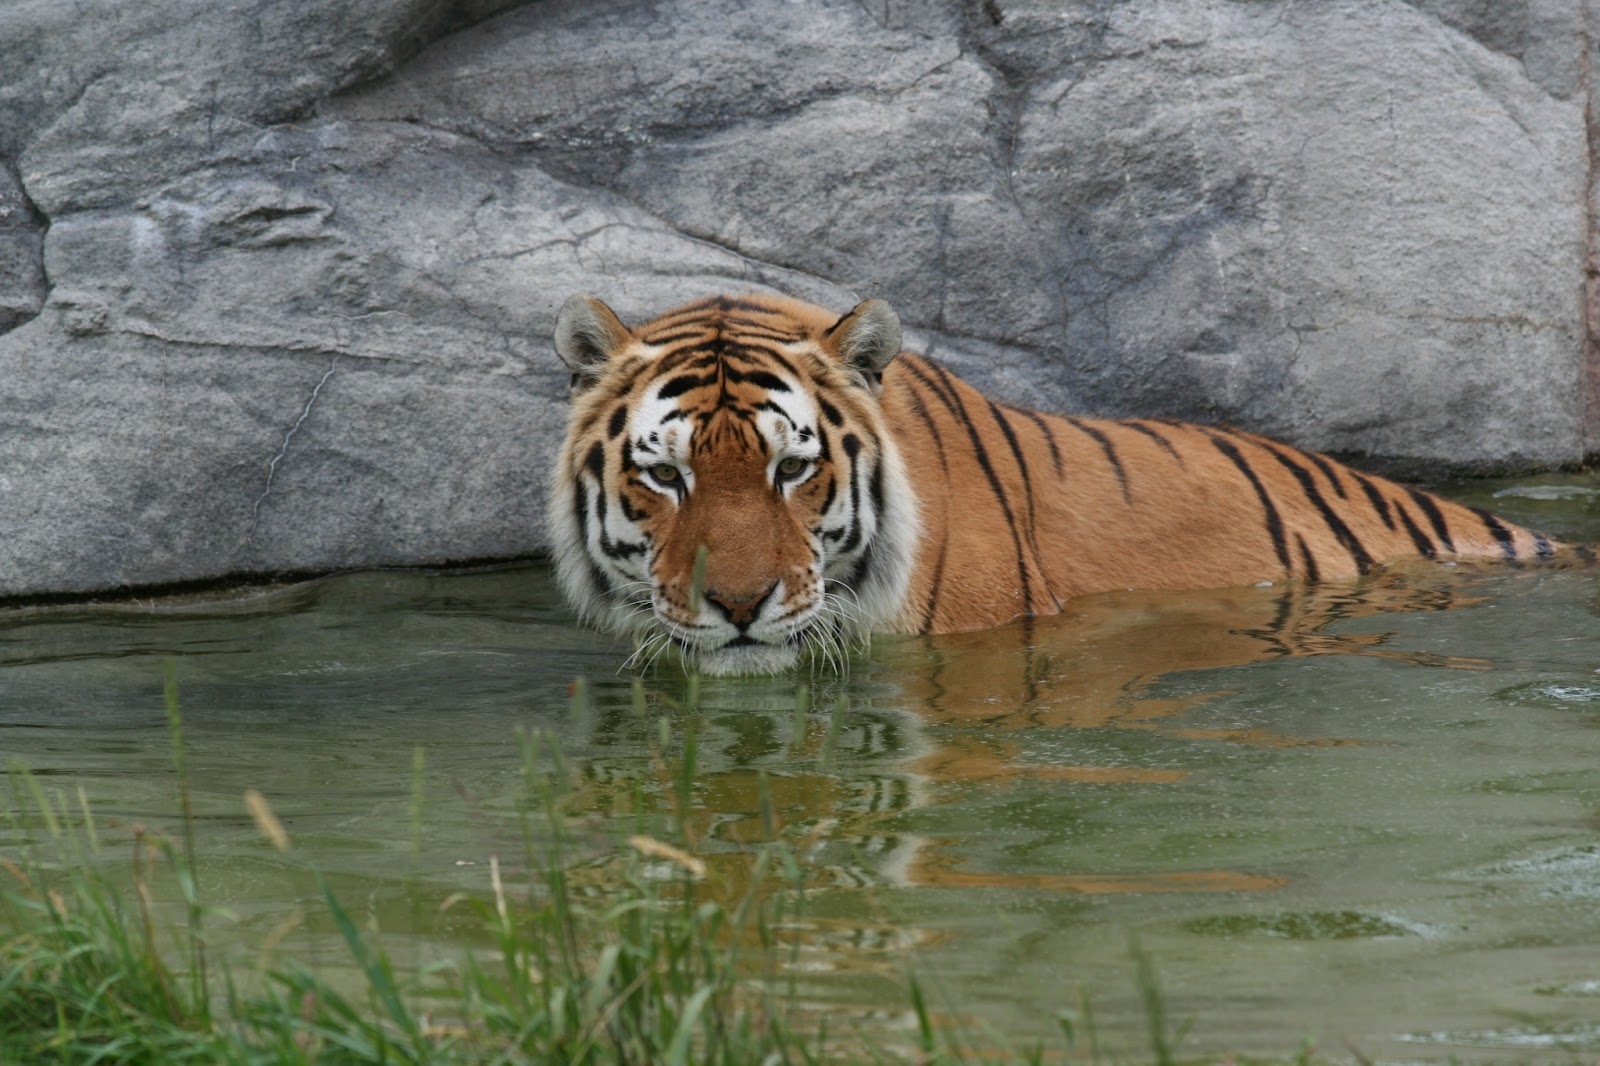 http://1.bp.blogspot.com/-VAcpcYdal08/T8Yyo7h0RVI/AAAAAAAAAOQ/5vhA_XkV7-E/s1600/Siberian+Tiger+at+Toronto+Zoo+by+Ber+Zophus+at+Wikimedia.jpg